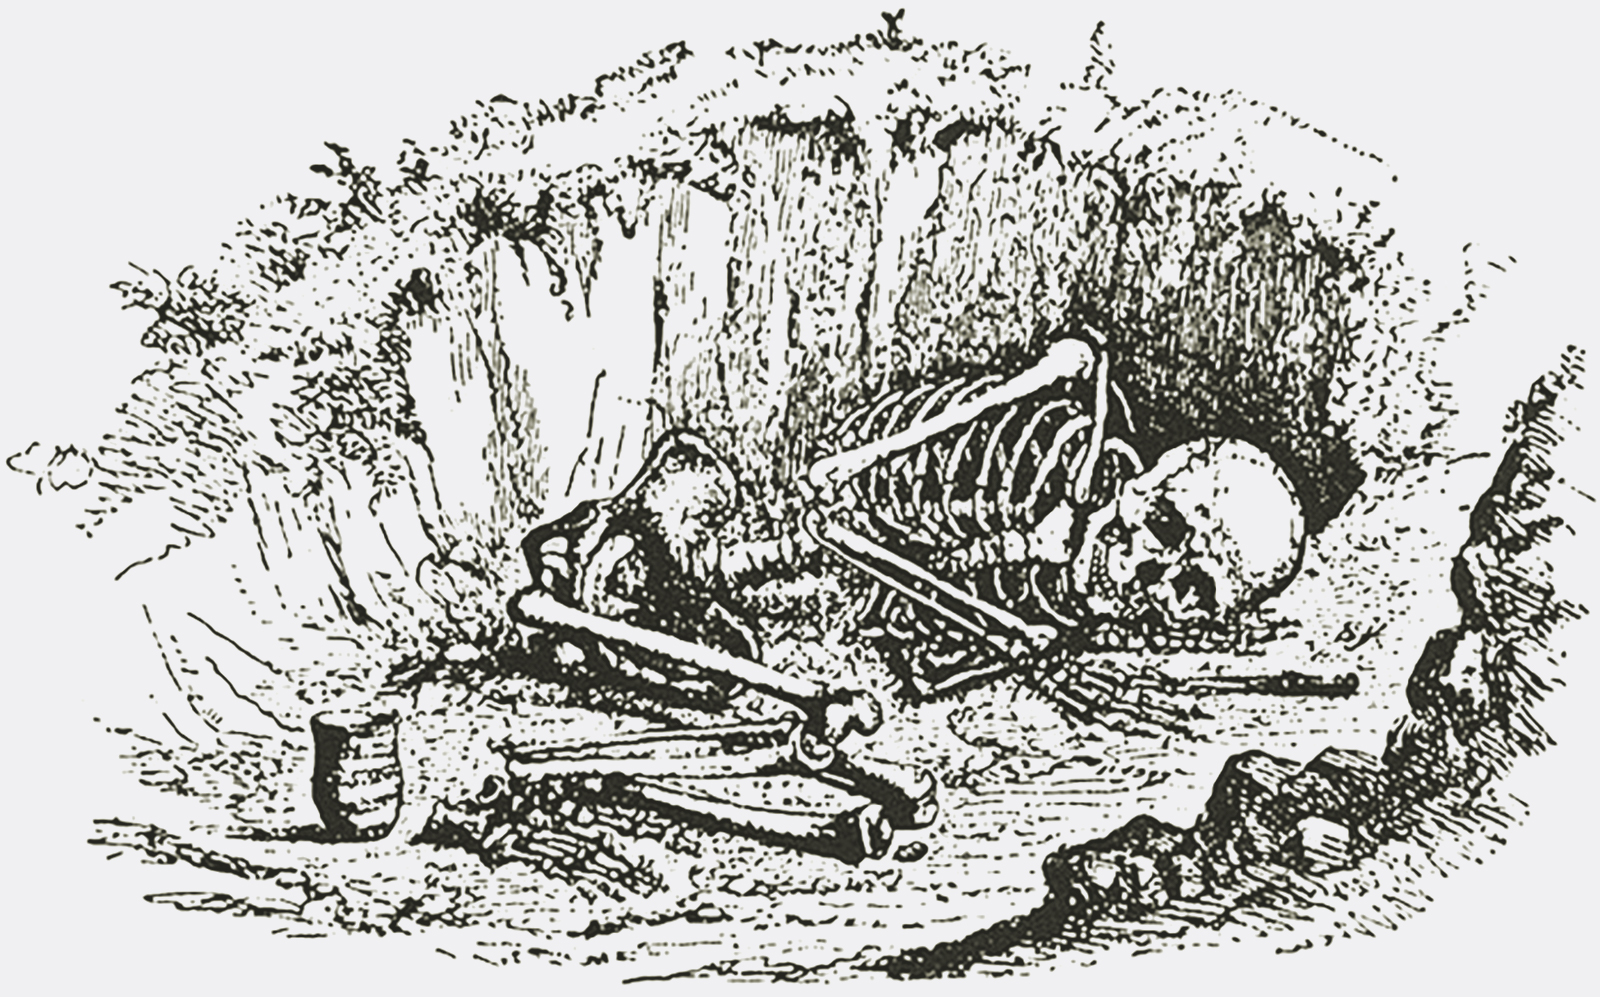 Beaker People burying the dead